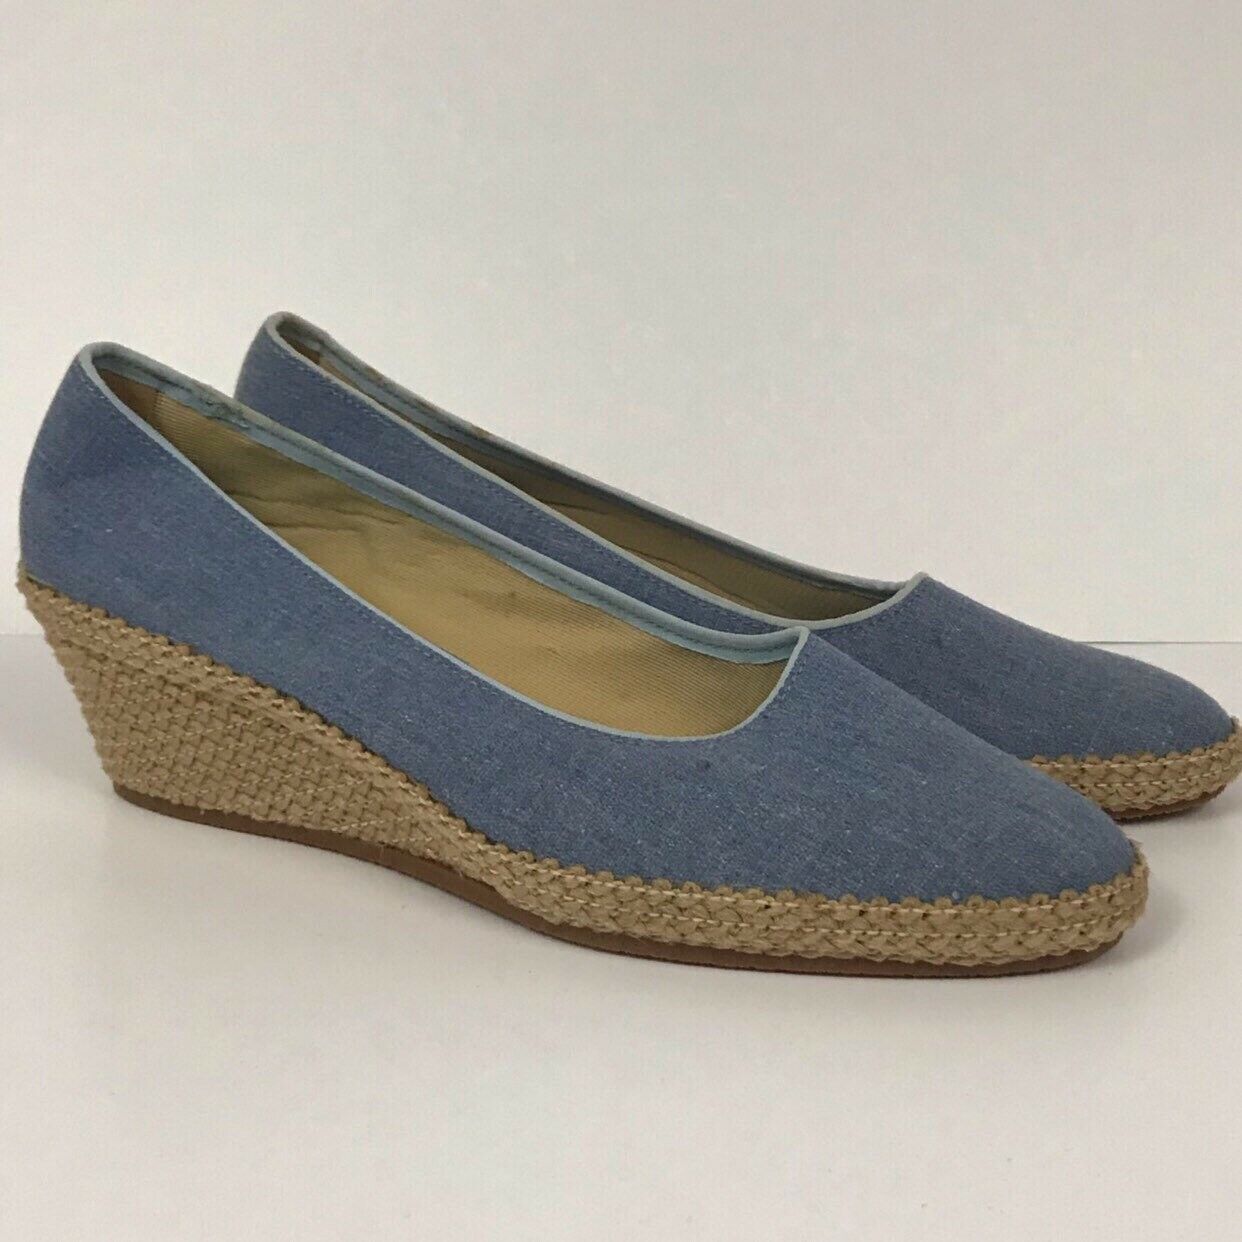 1980s Blue Espadrilles Wedge Shoes / 80s Canvas Slip On Woven Shoes ...